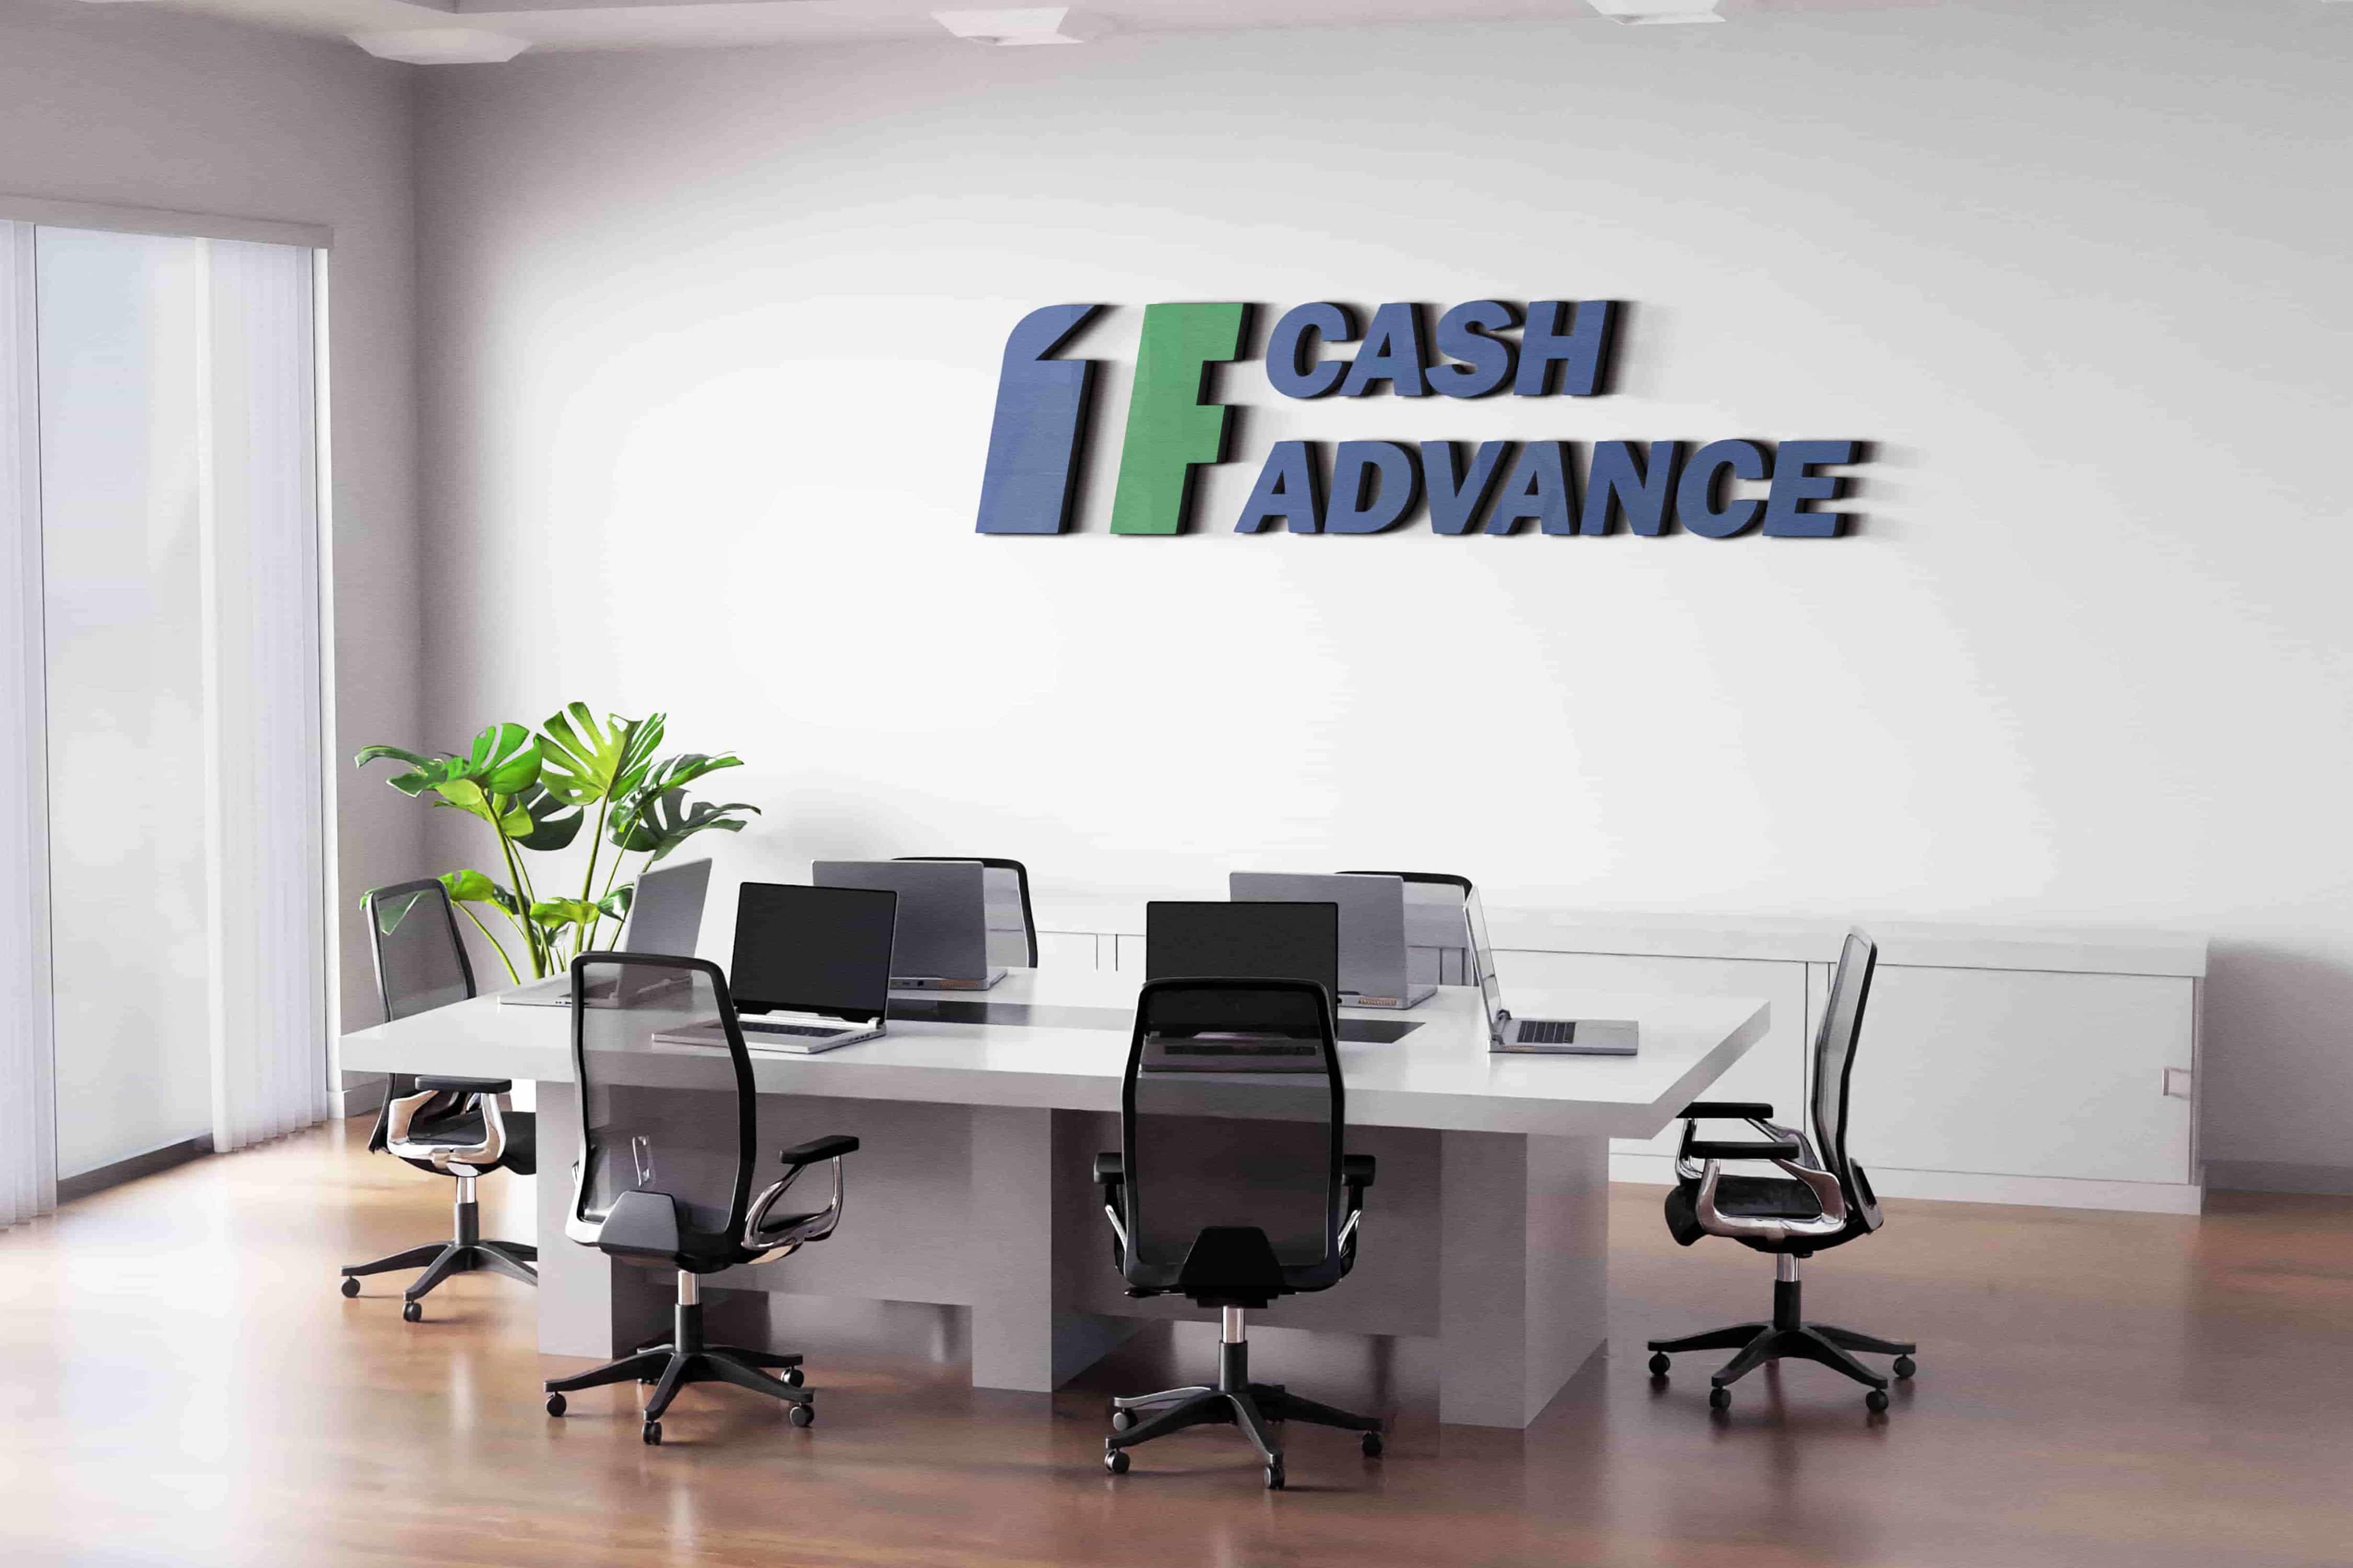 1F Cash Advance payday loans Omaha